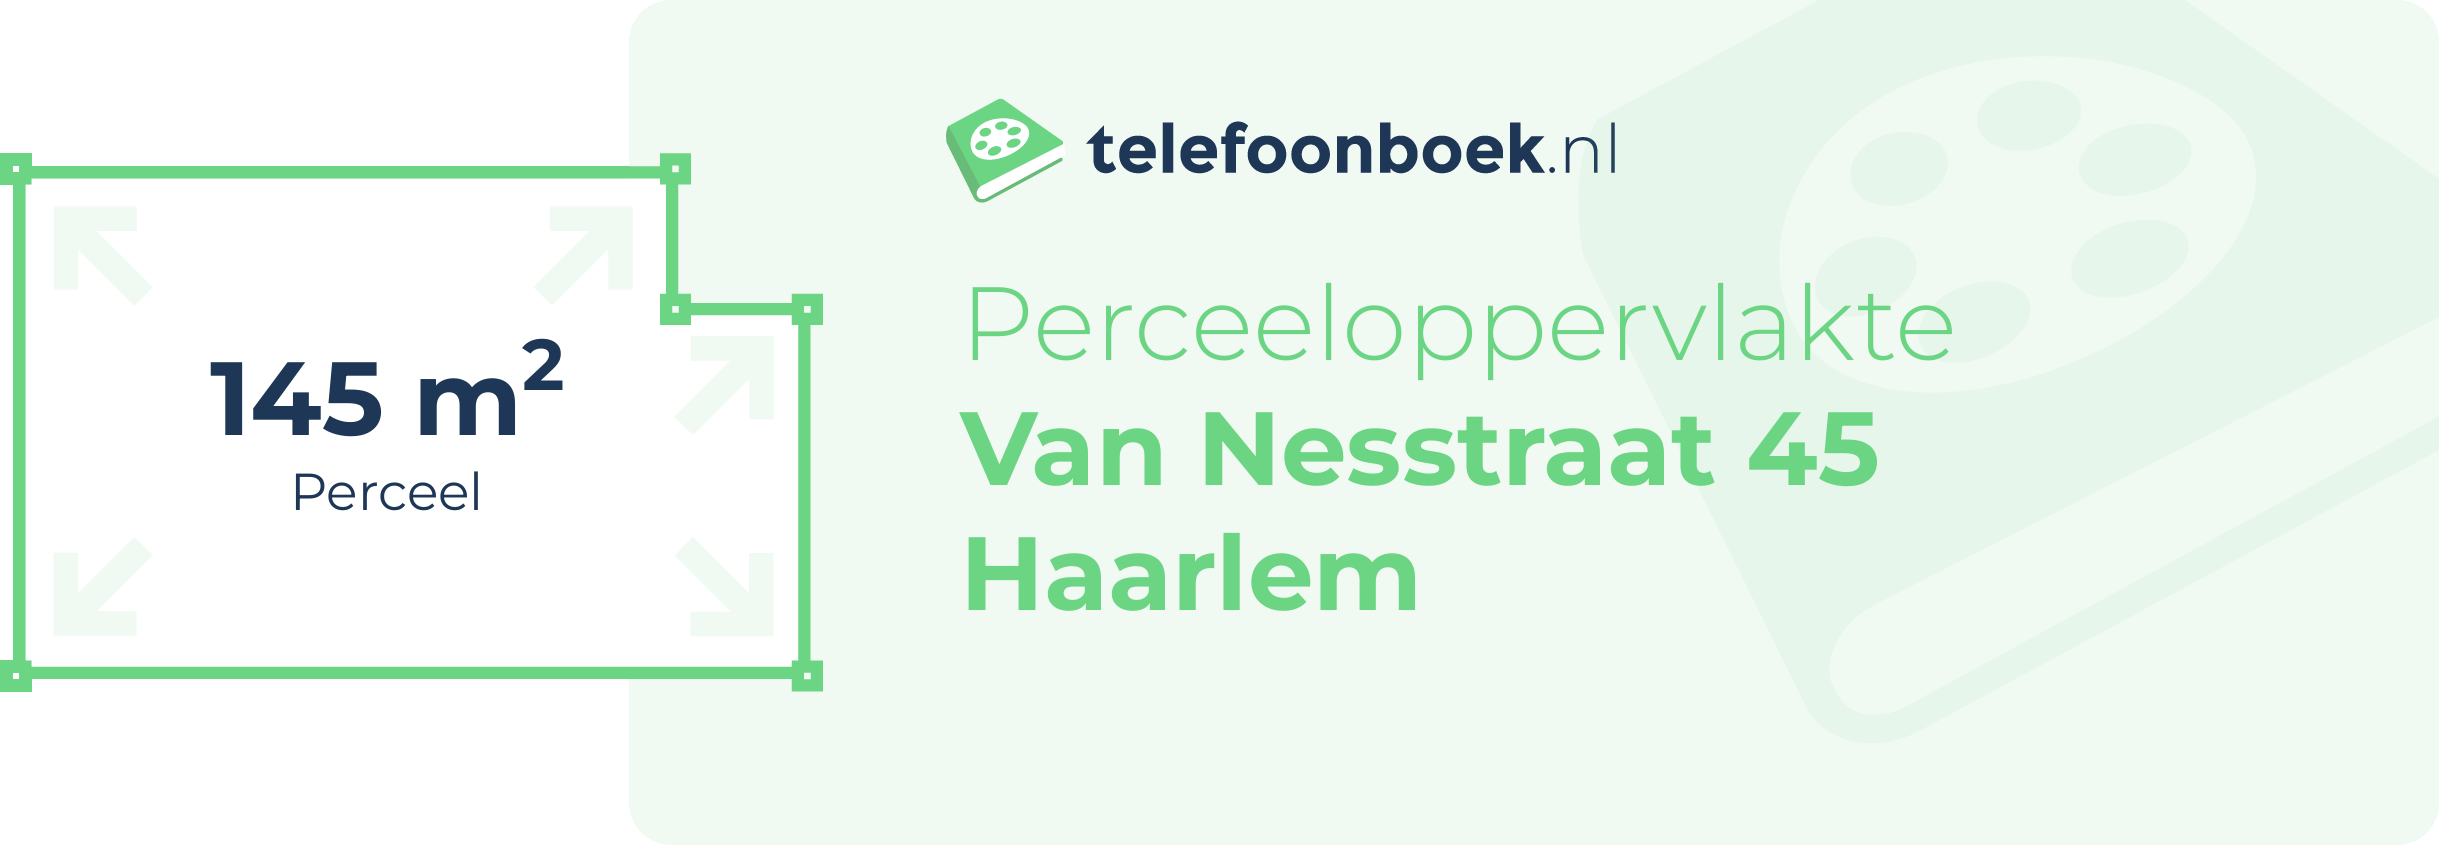 Perceeloppervlakte Van Nesstraat 45 Haarlem